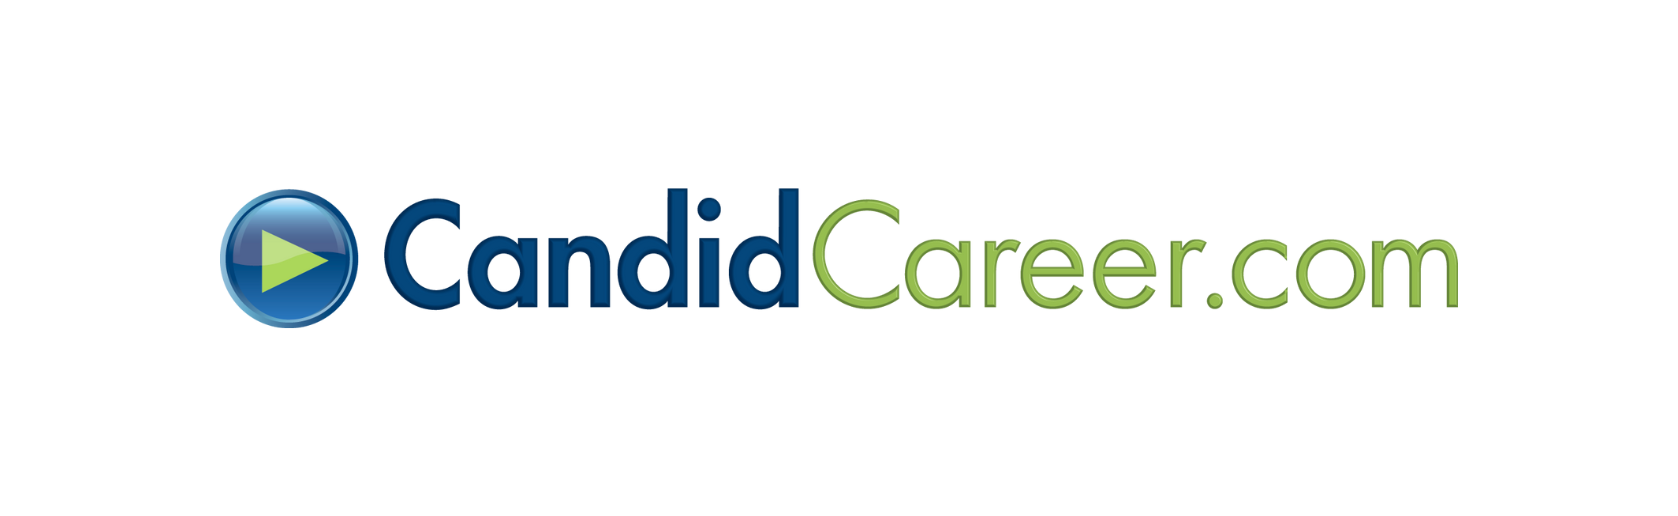 Candid Career logo